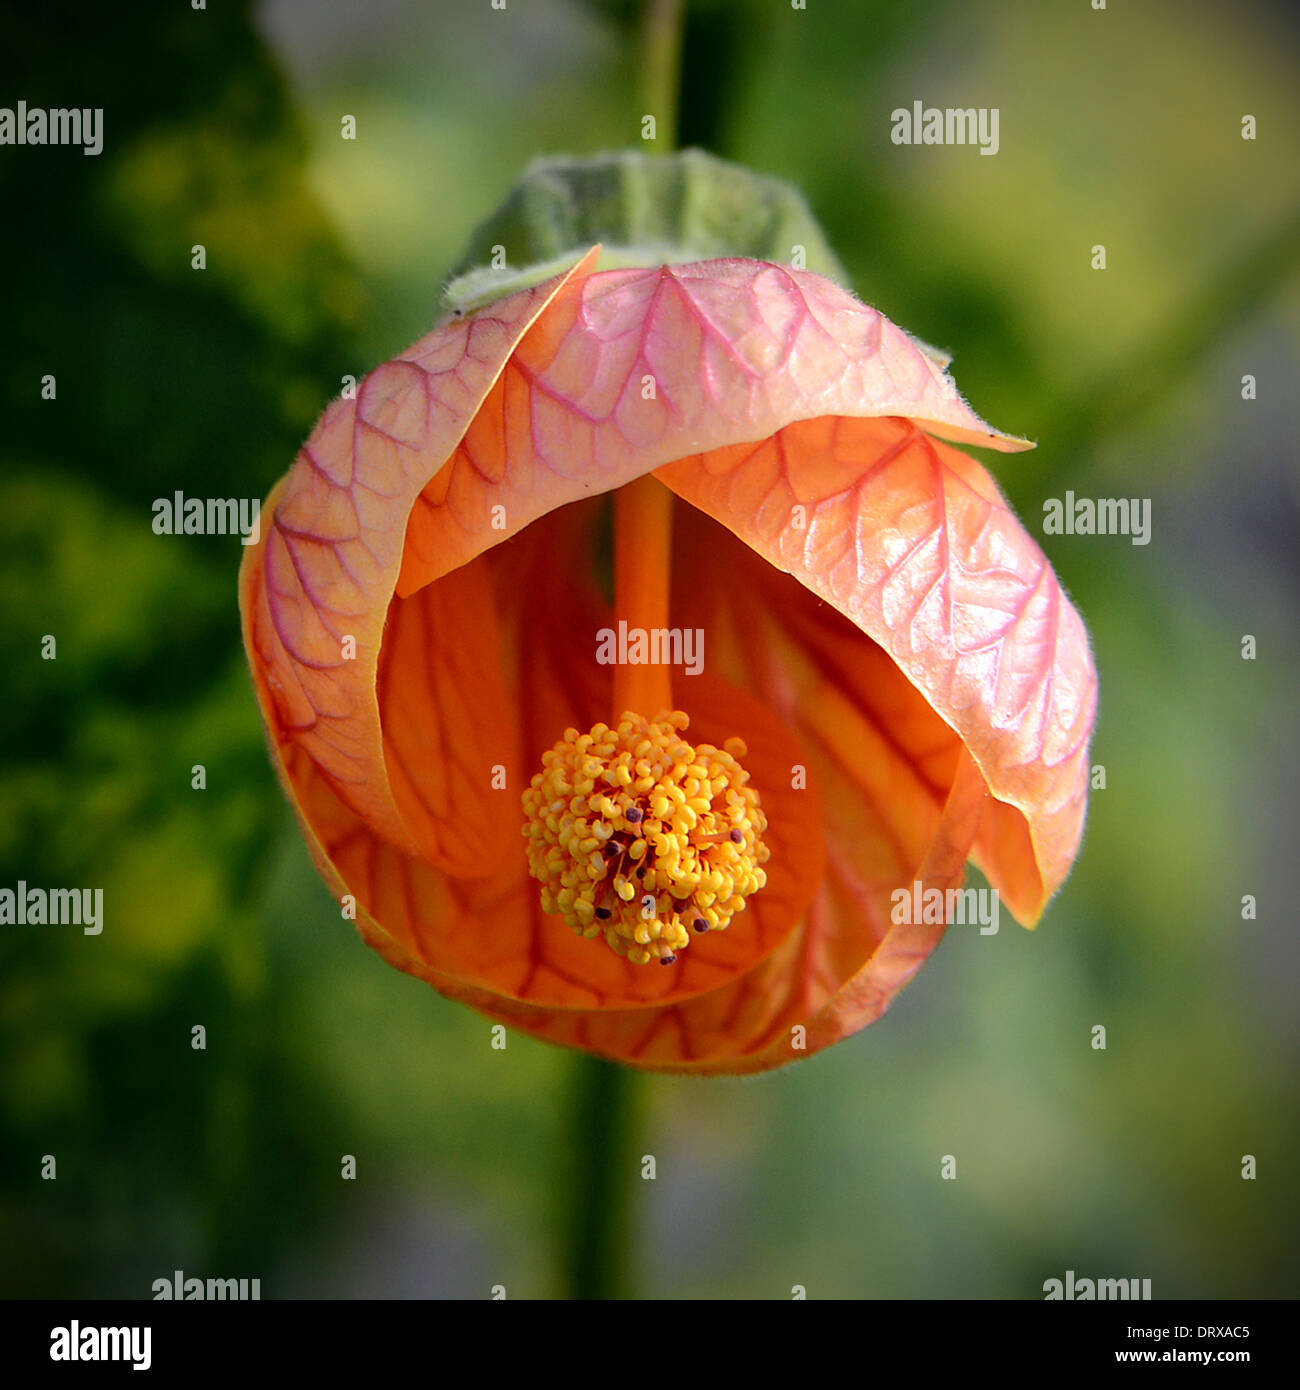 Abutilon 'Marion' Malvaceae Family, orange flower opening Stock Photo